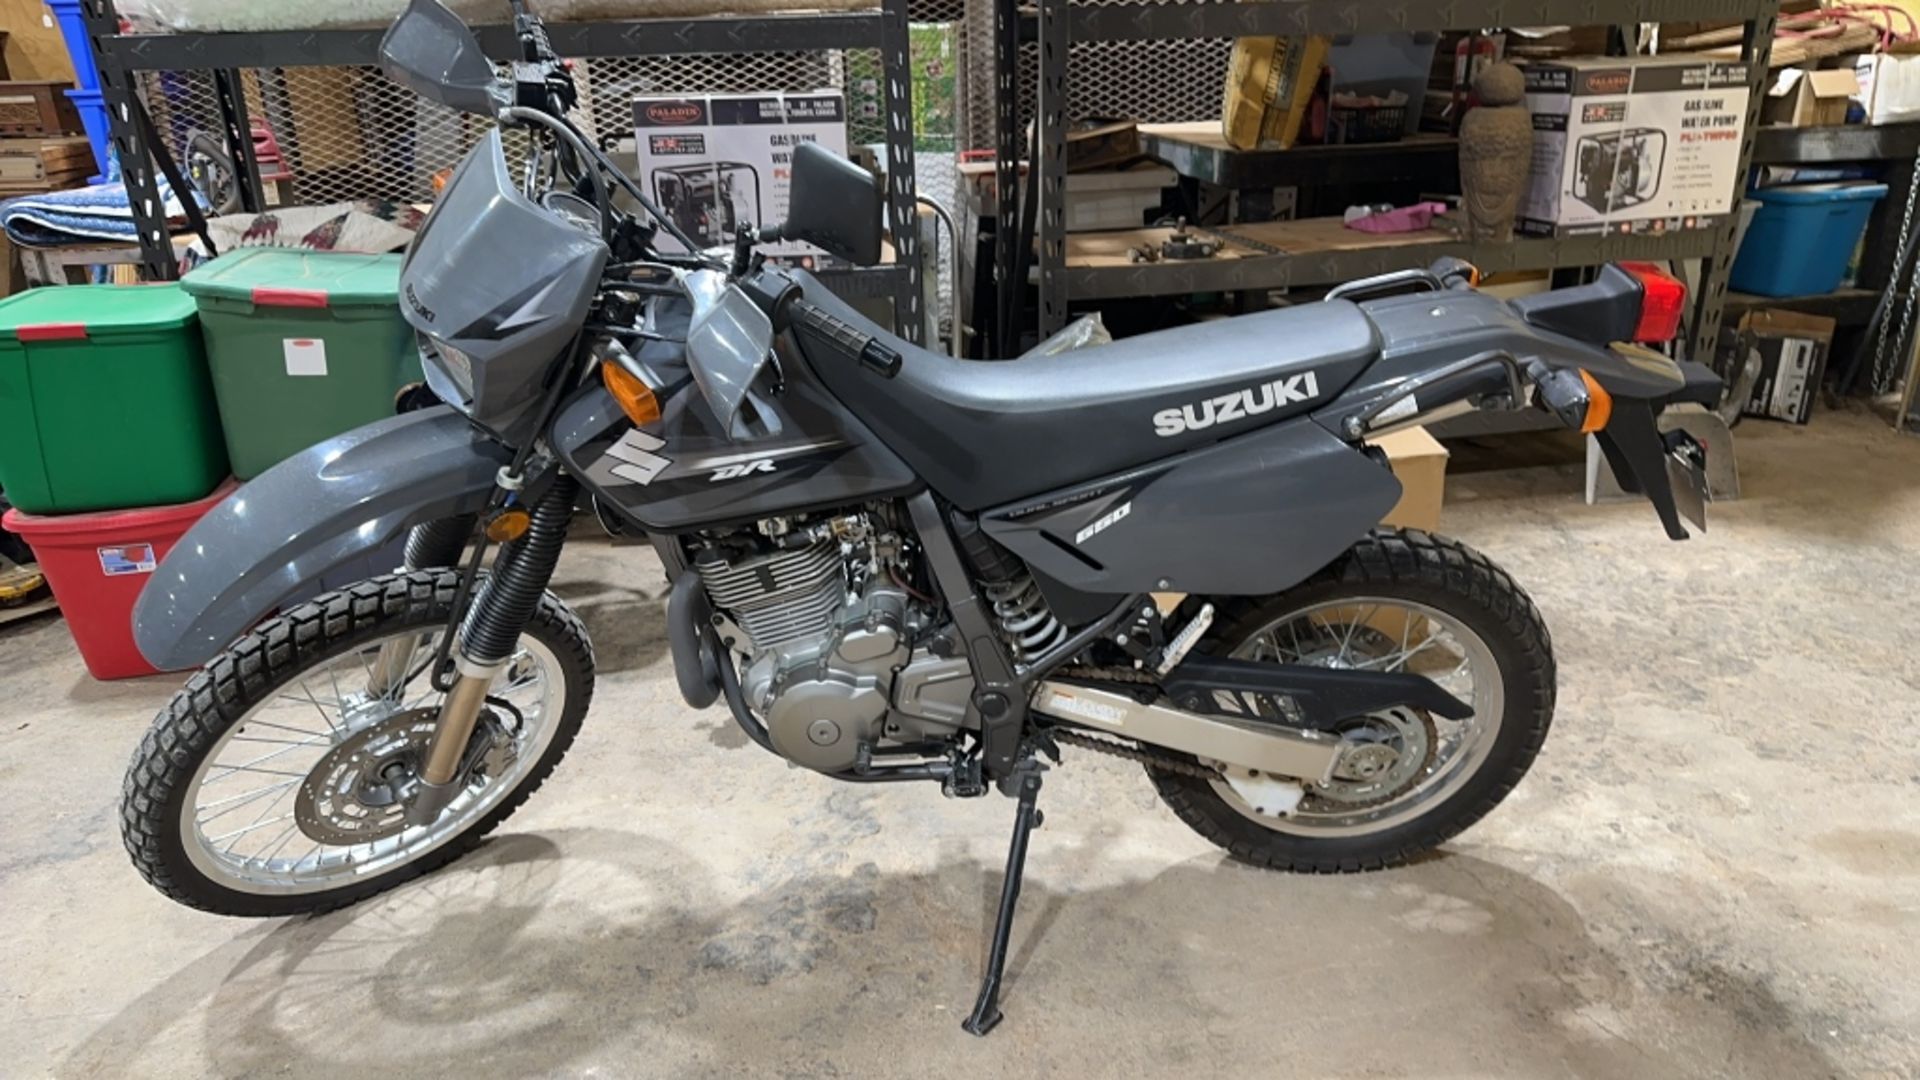 2012 Suzuki DR650S motorcycle - Image 36 of 36